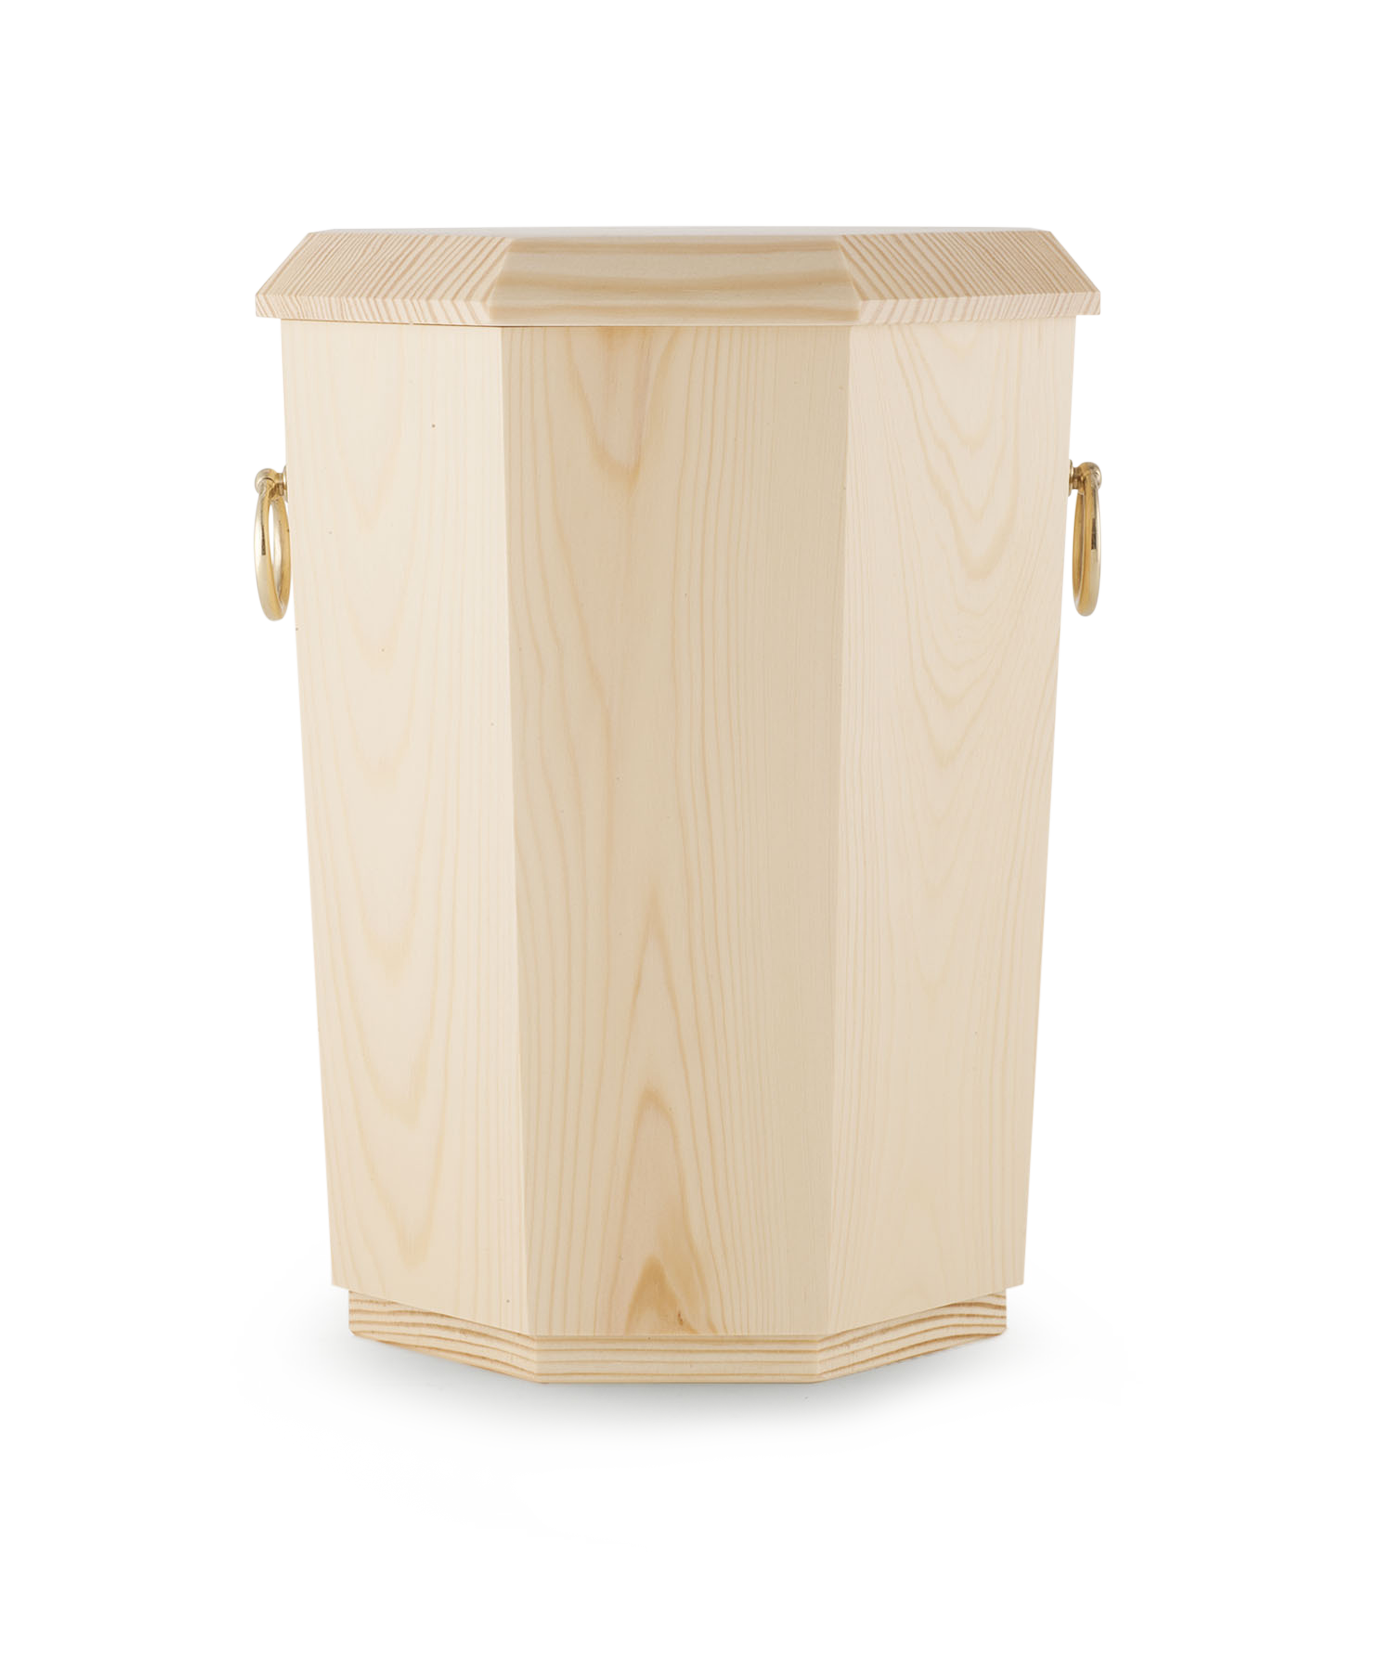 Völsing urn classic with handles wood